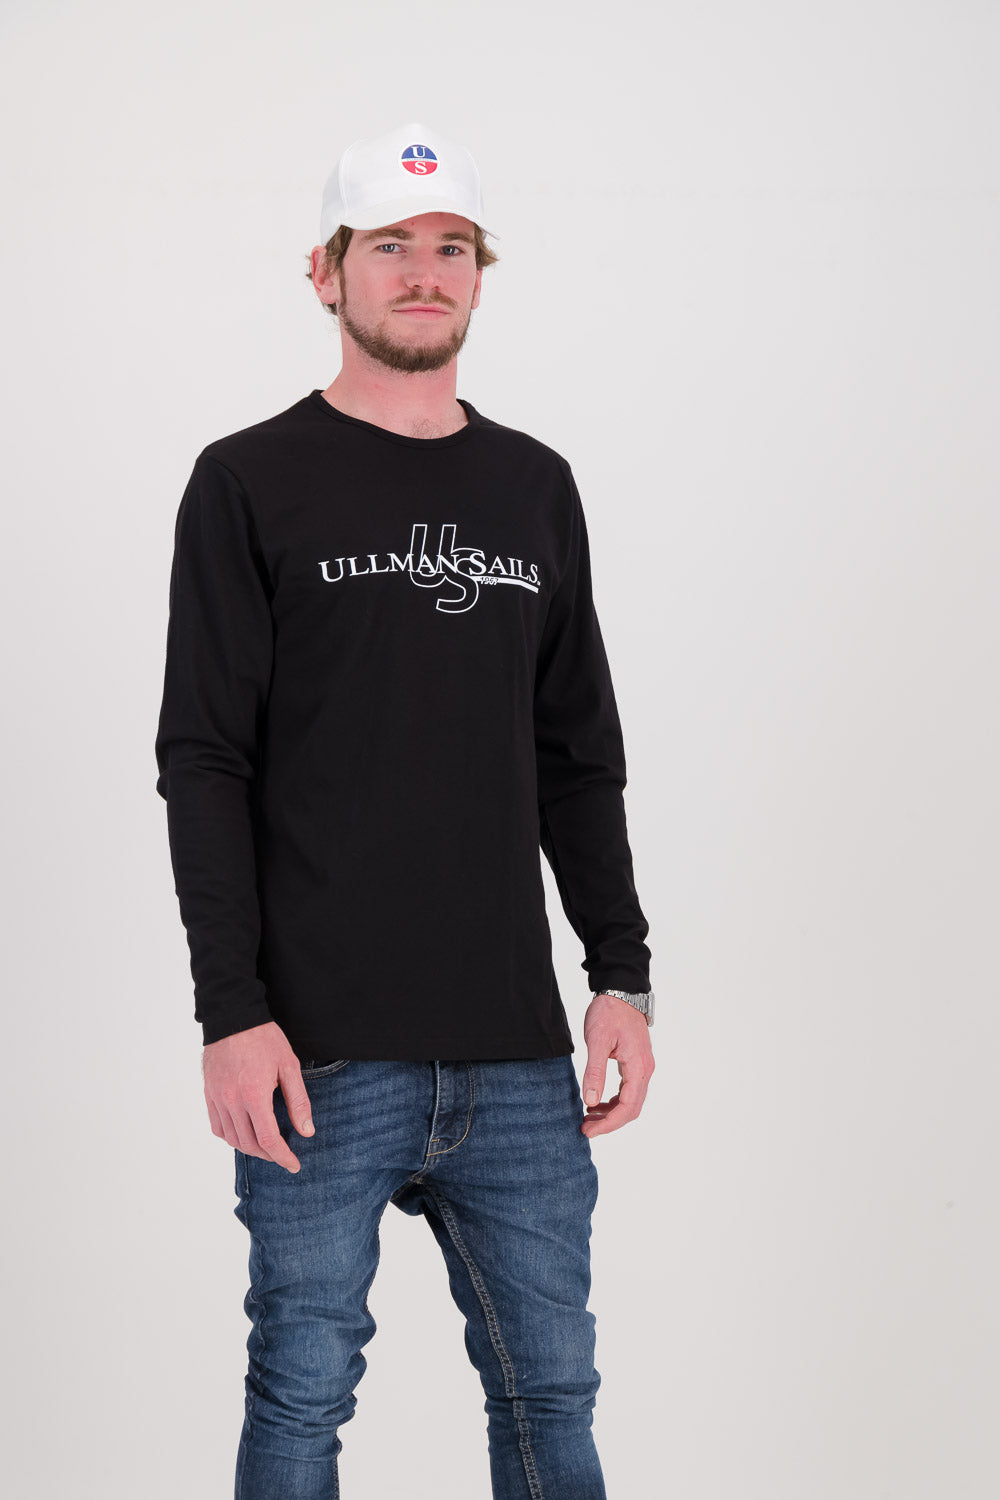     Ullman-Sails-Black-Long-Sleeve-Tshirt-Mens